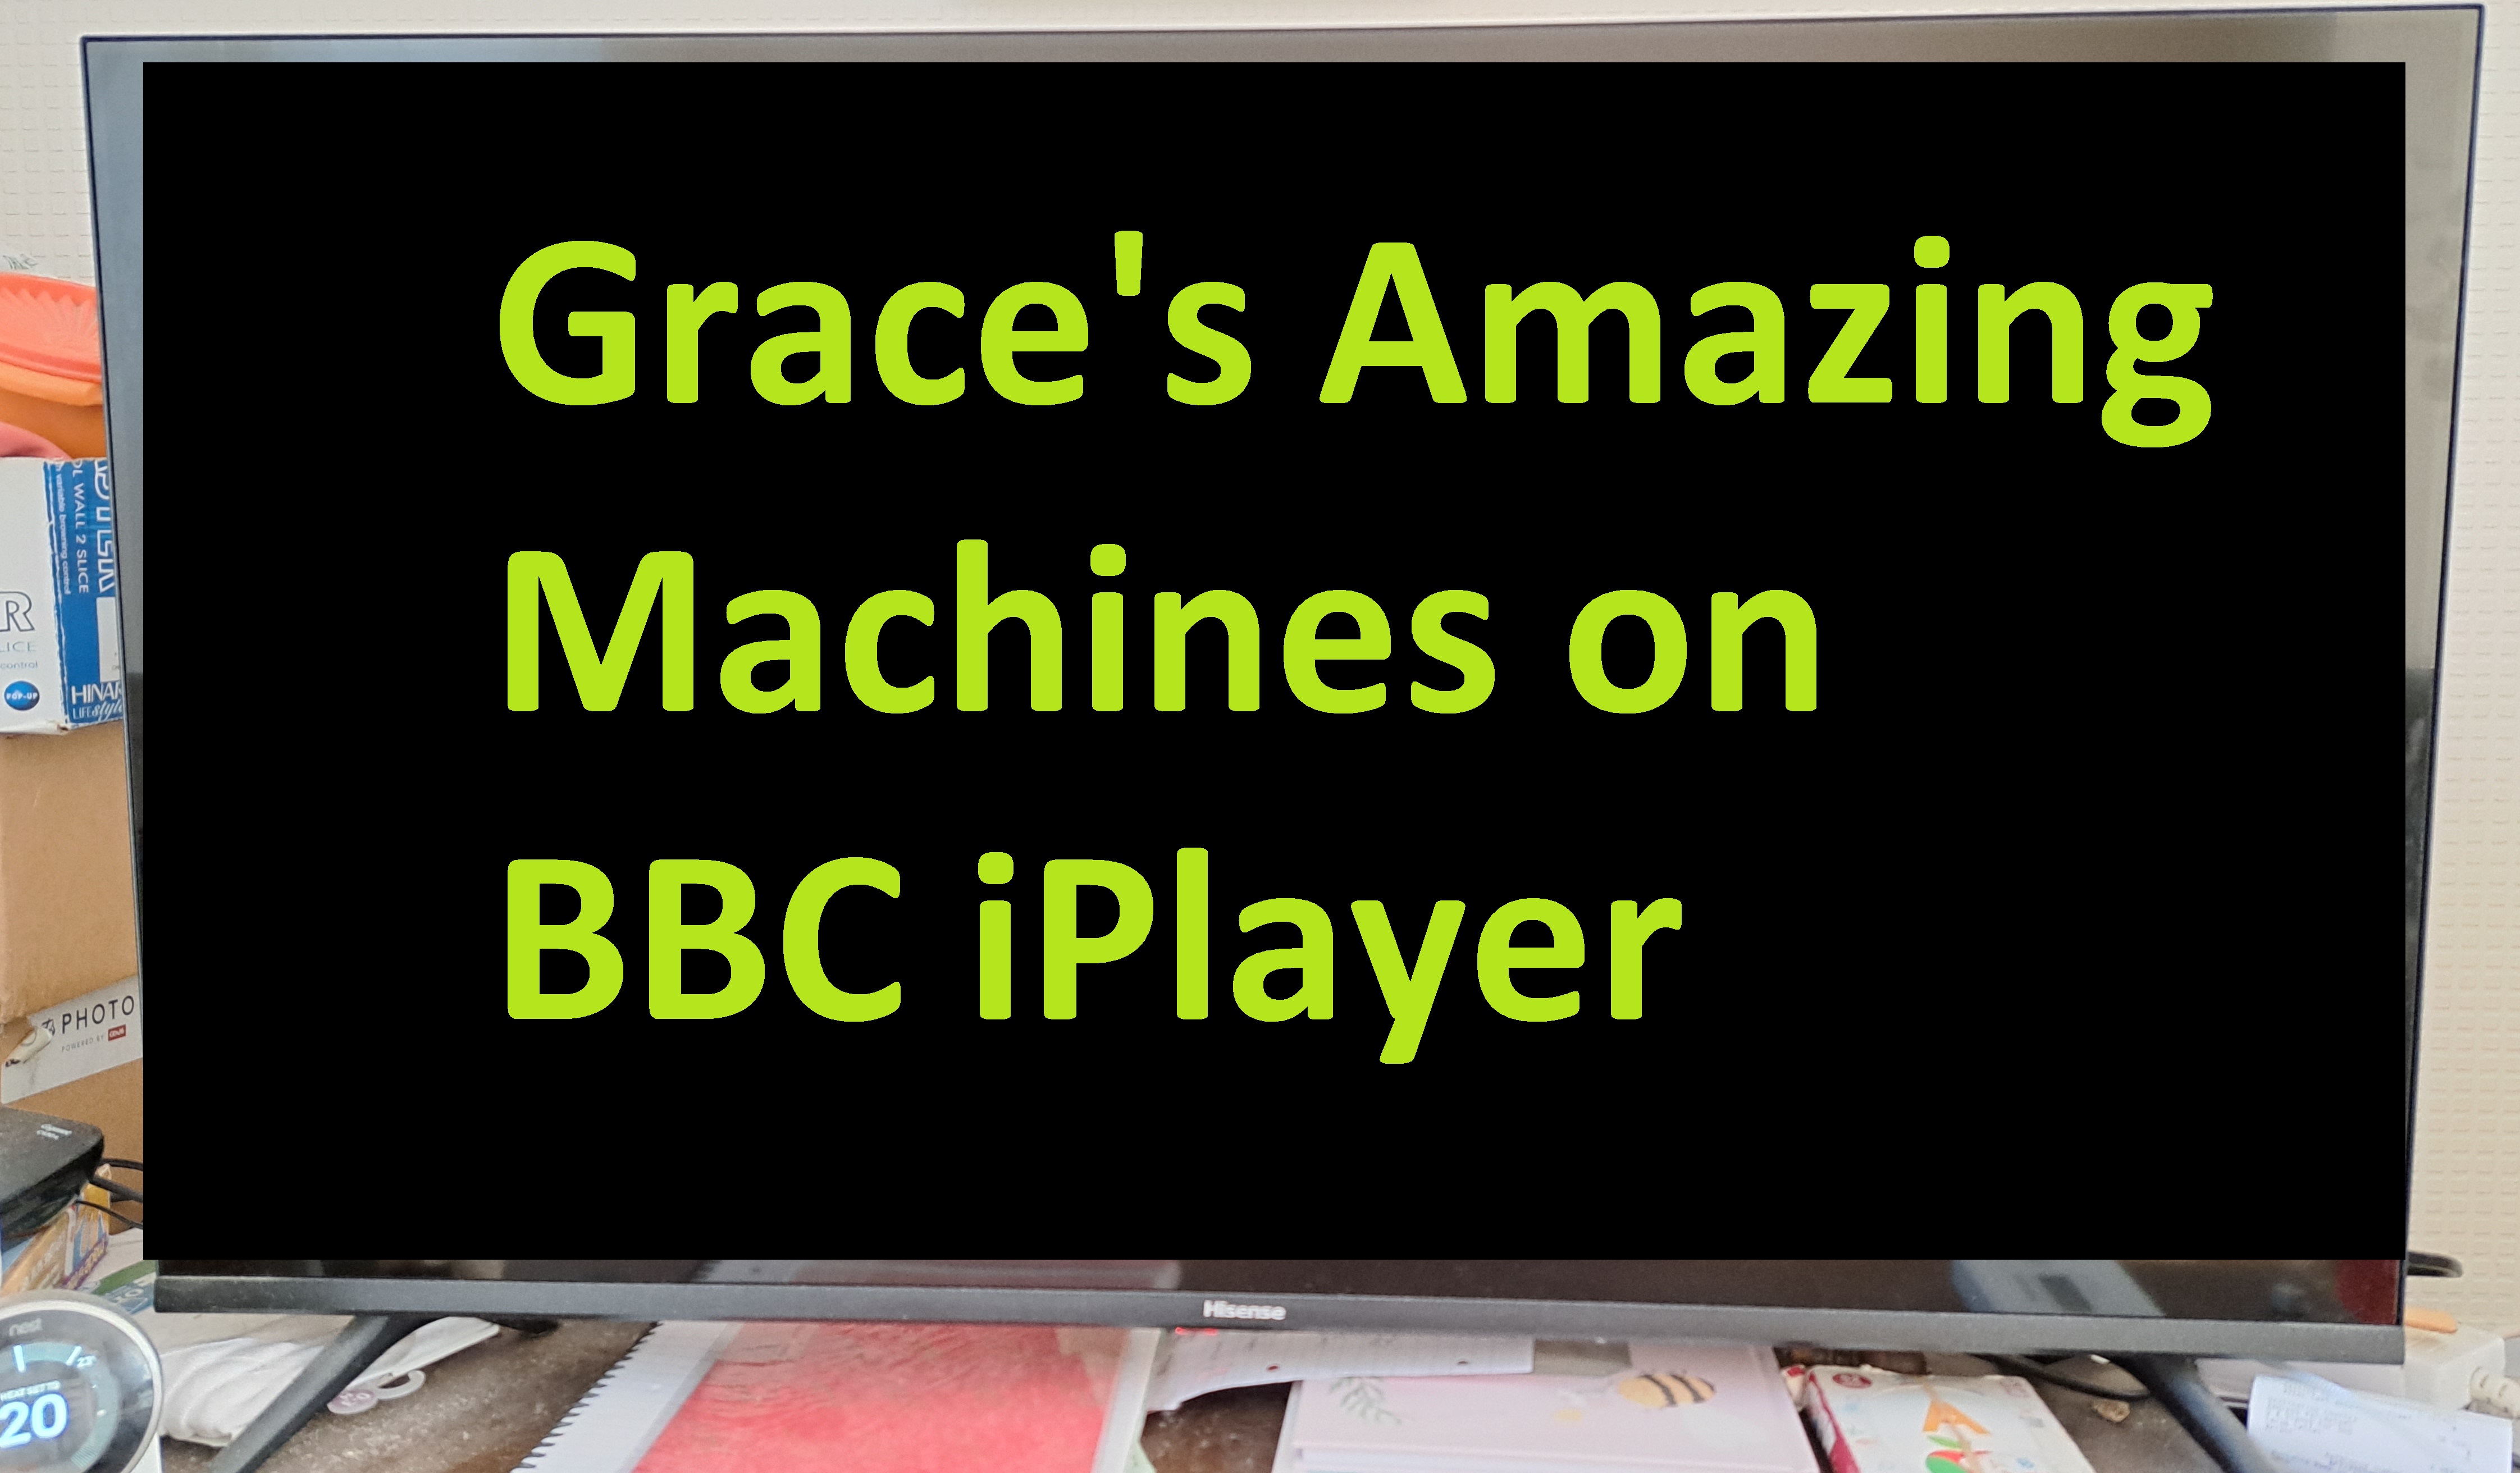 Grace's Amazing Machines on BBC iPlayer